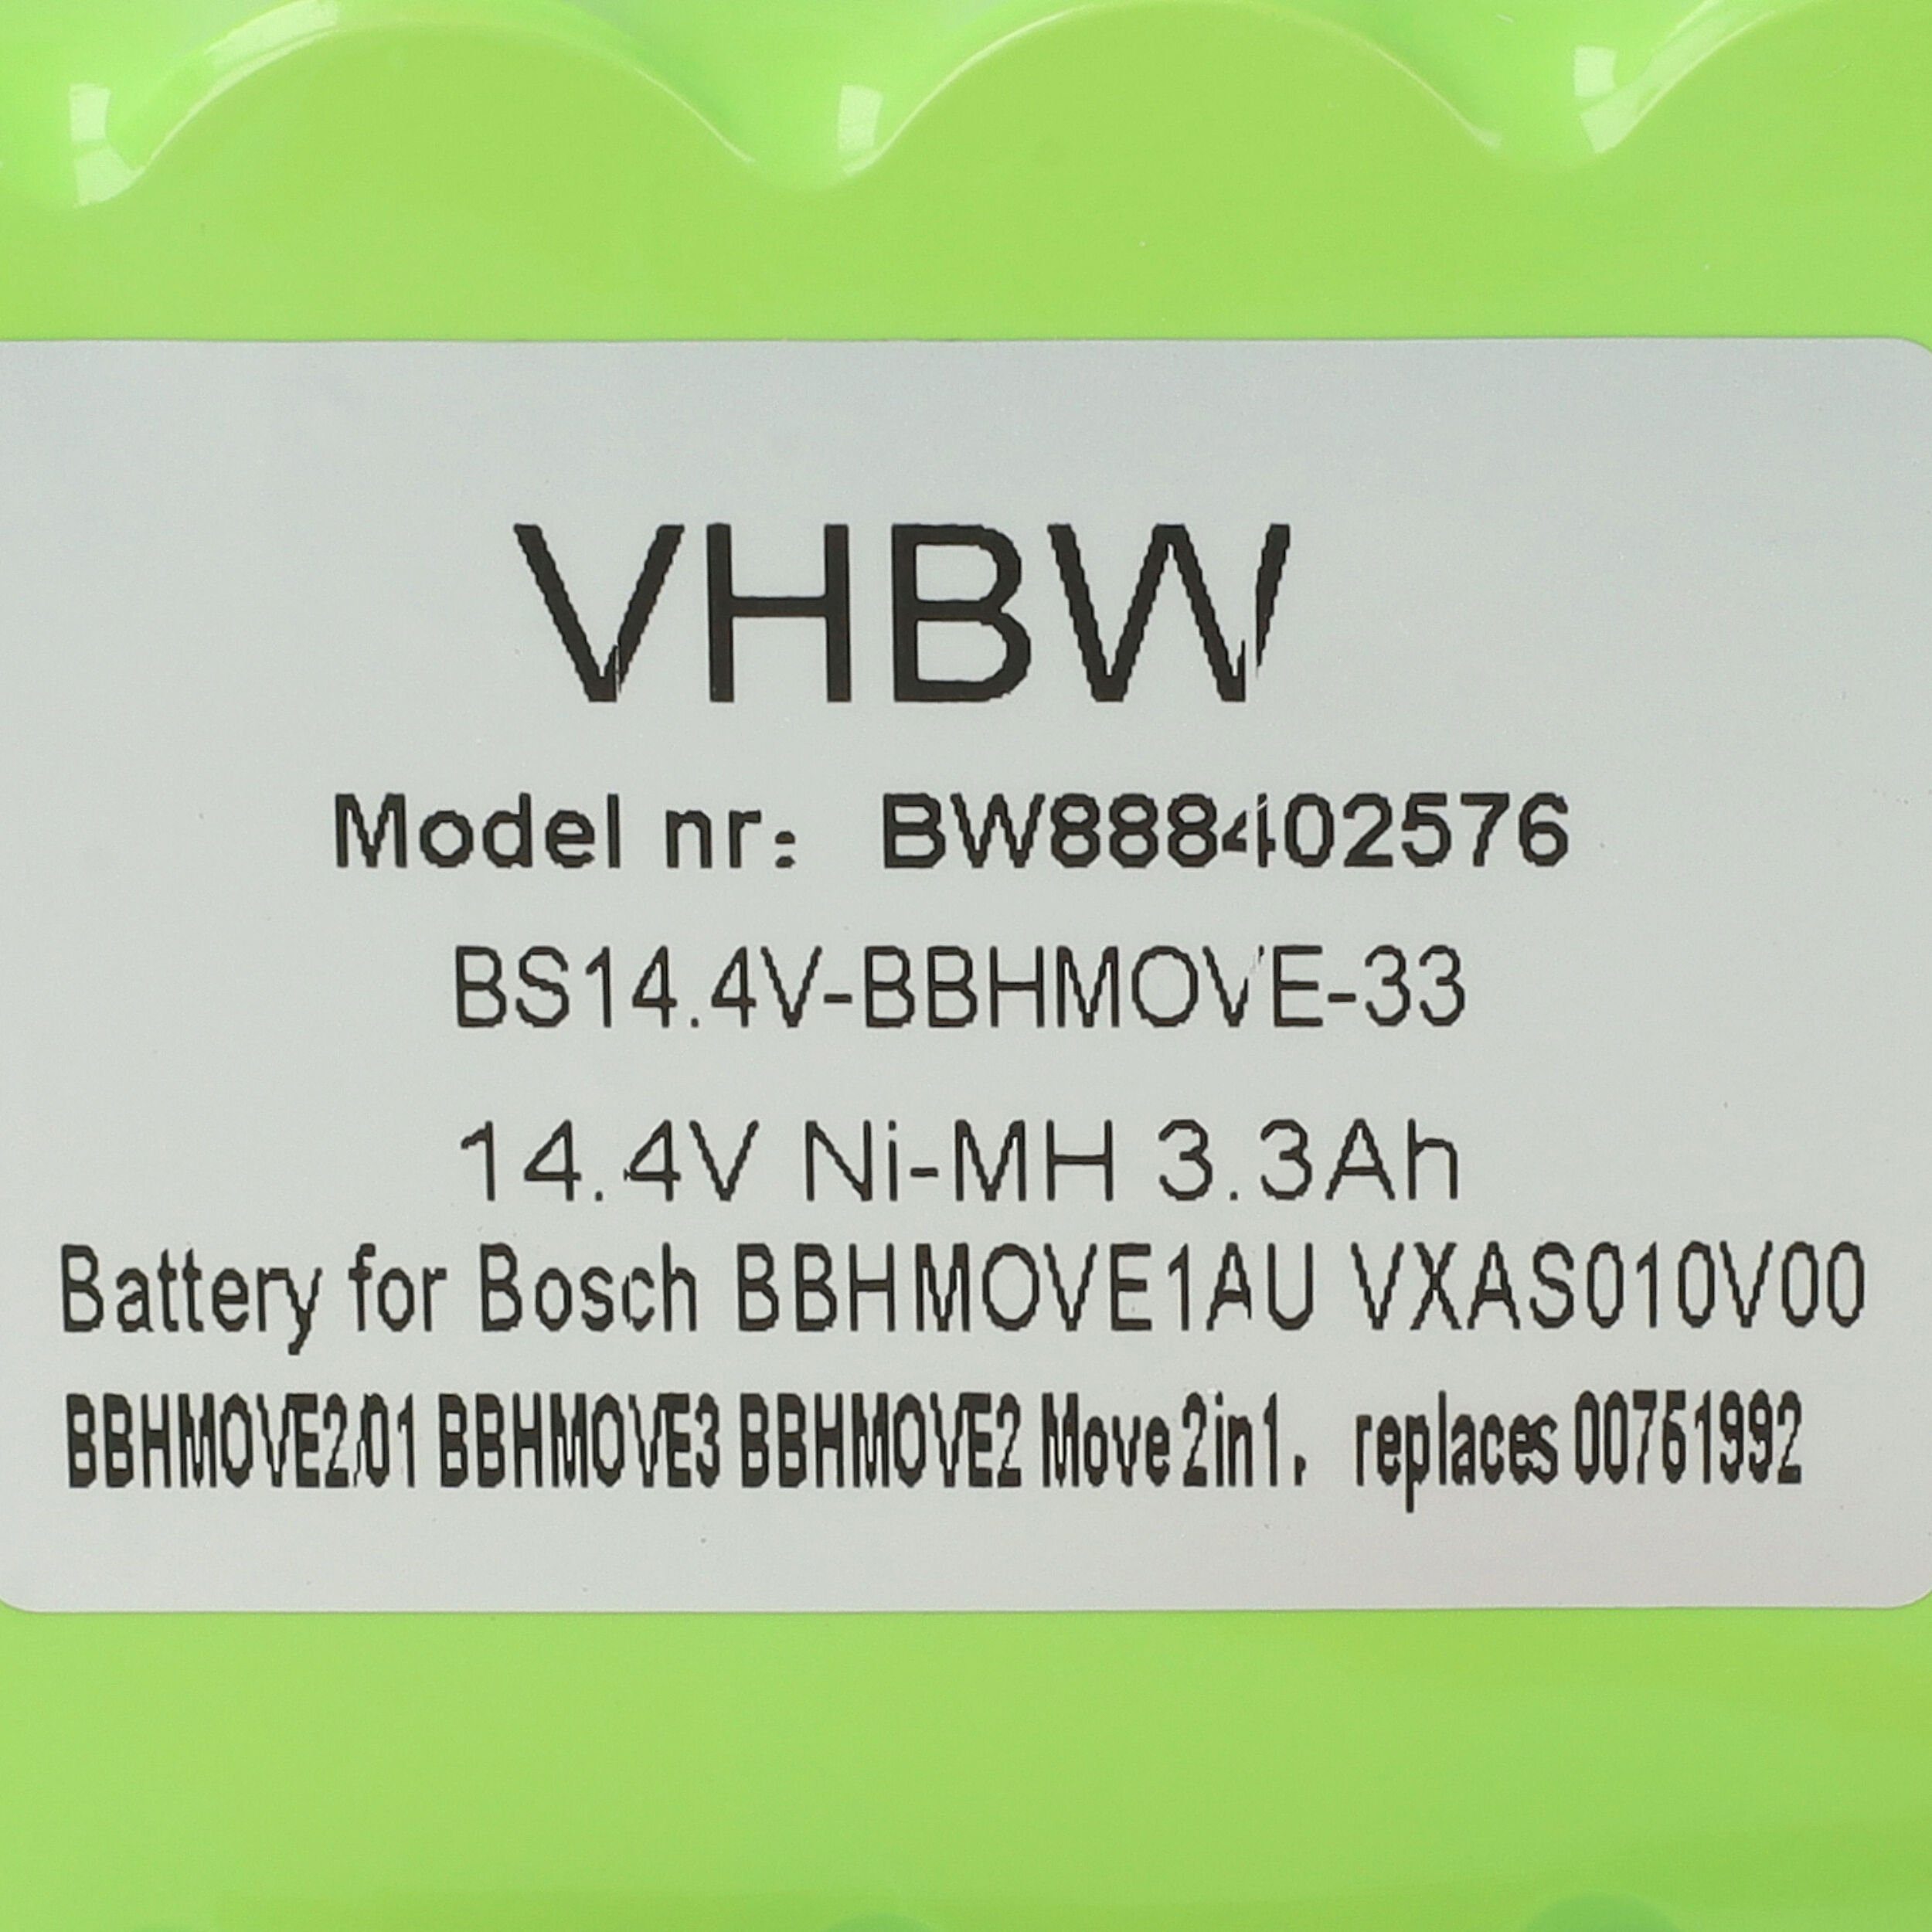 NiMH kompatibel (14,4 mAh V) mit HandiVac 3300 HH5010WD Staubsauger-Akku vhbw Hoover